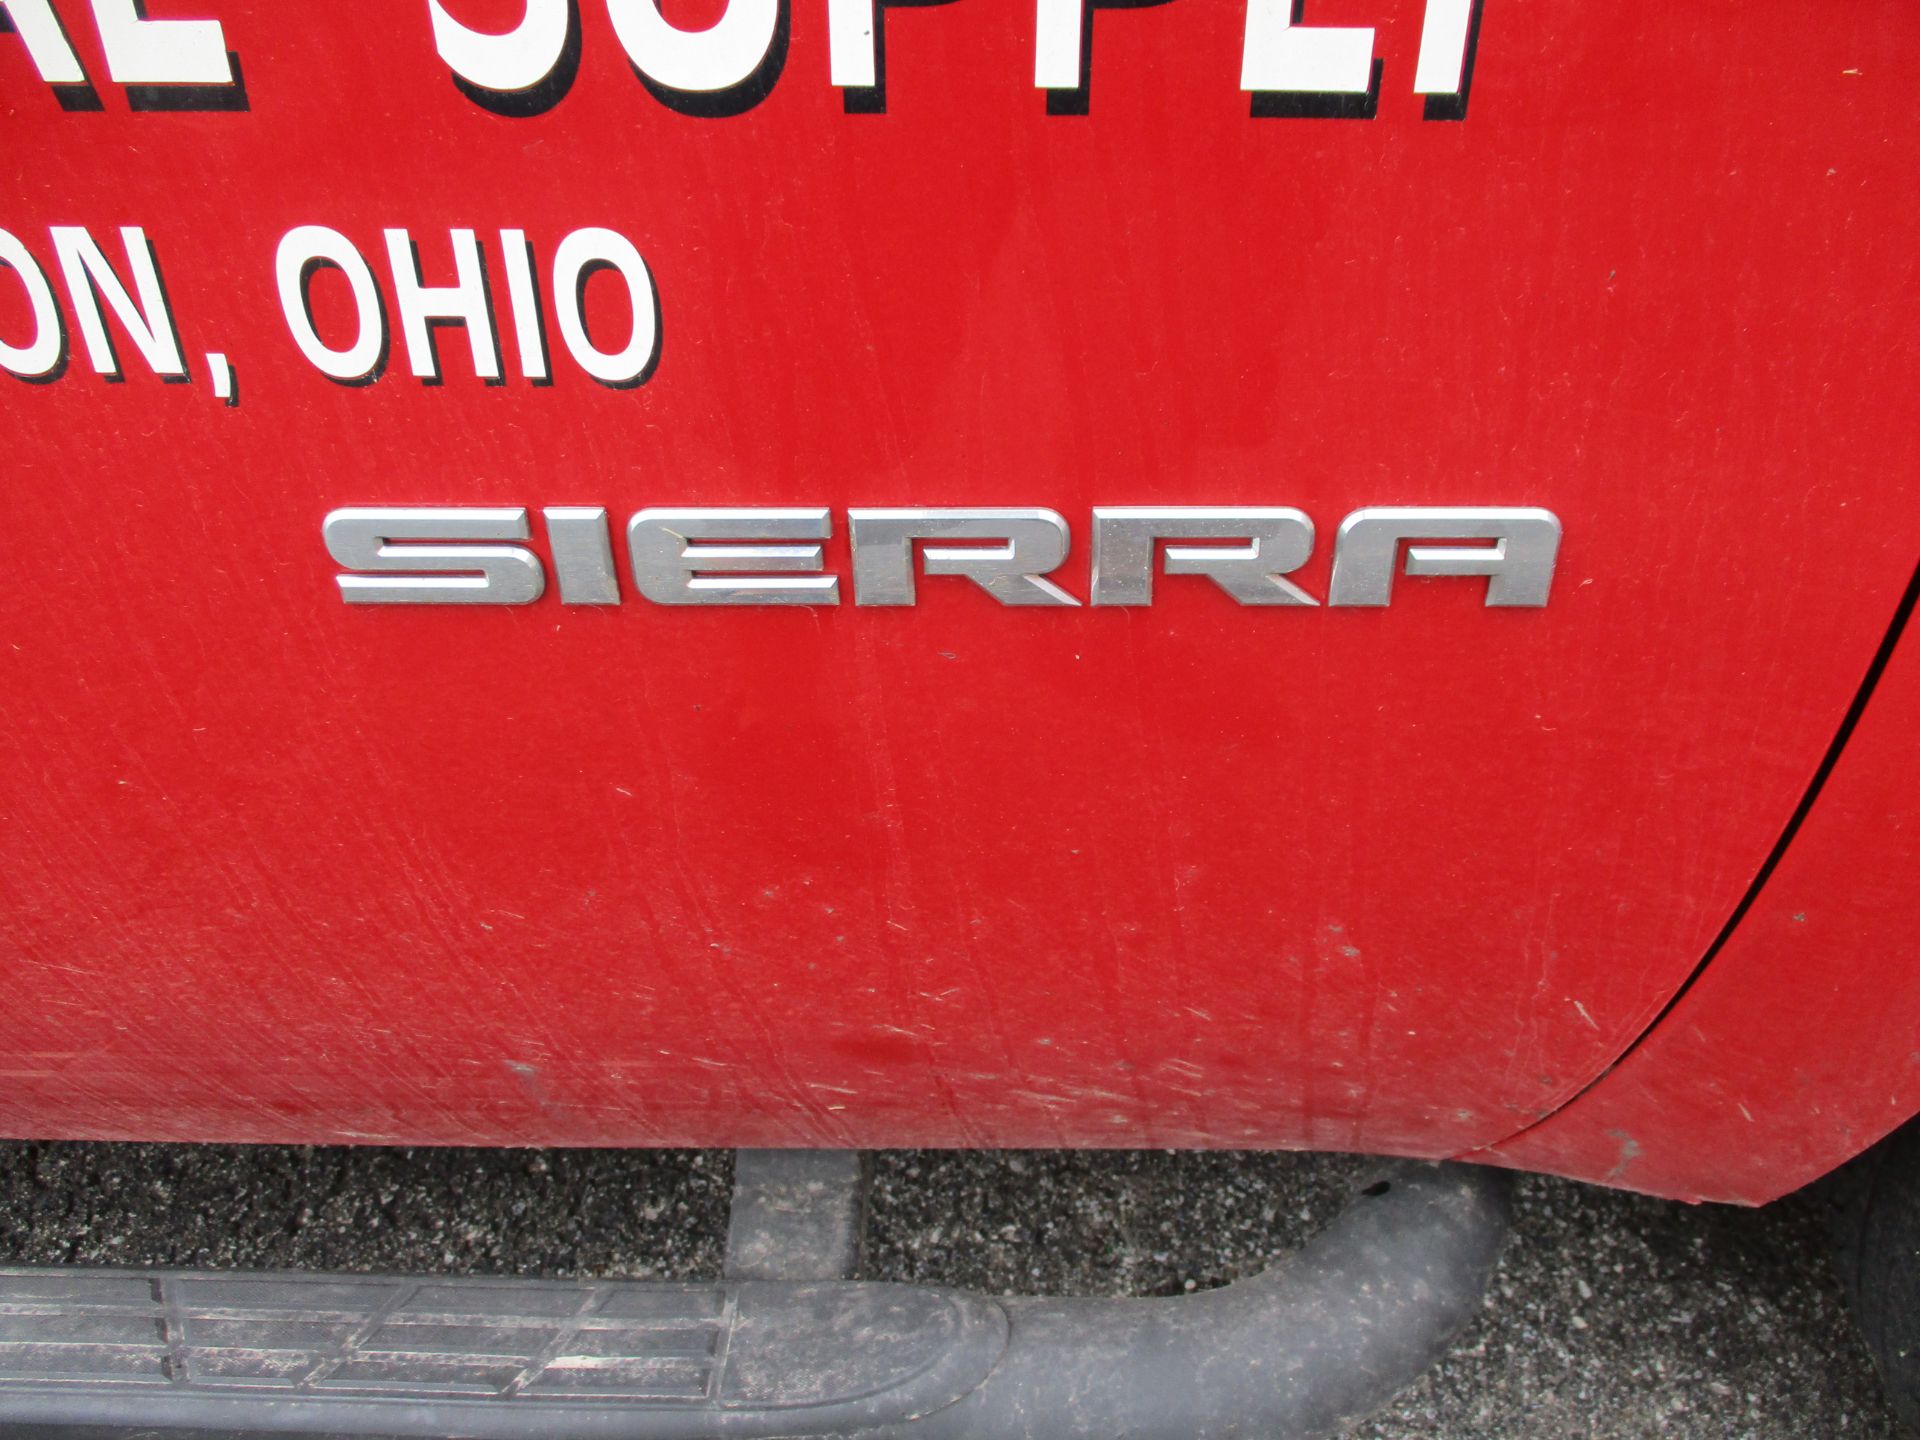 2012 GMC Sierra 1500 Pickup, VIN 1GTN1TEAXCZ138182, Regular Cab, Automatic, AC, 8' Bed, Tonneau - Image 10 of 24